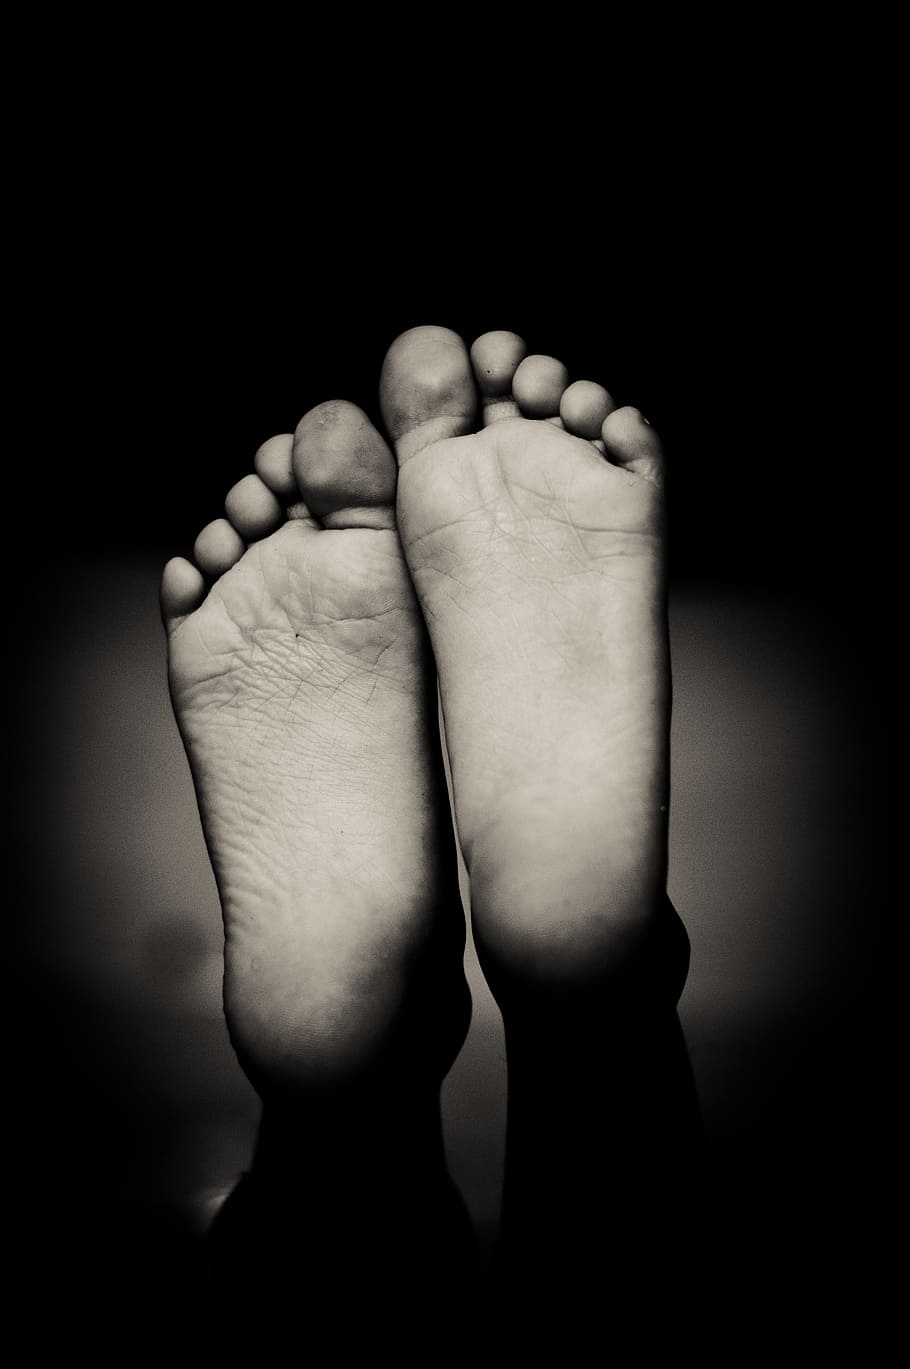 dark, black and white, foot, body part, human body part, barefoot, black background, studio shot, indoors, human leg